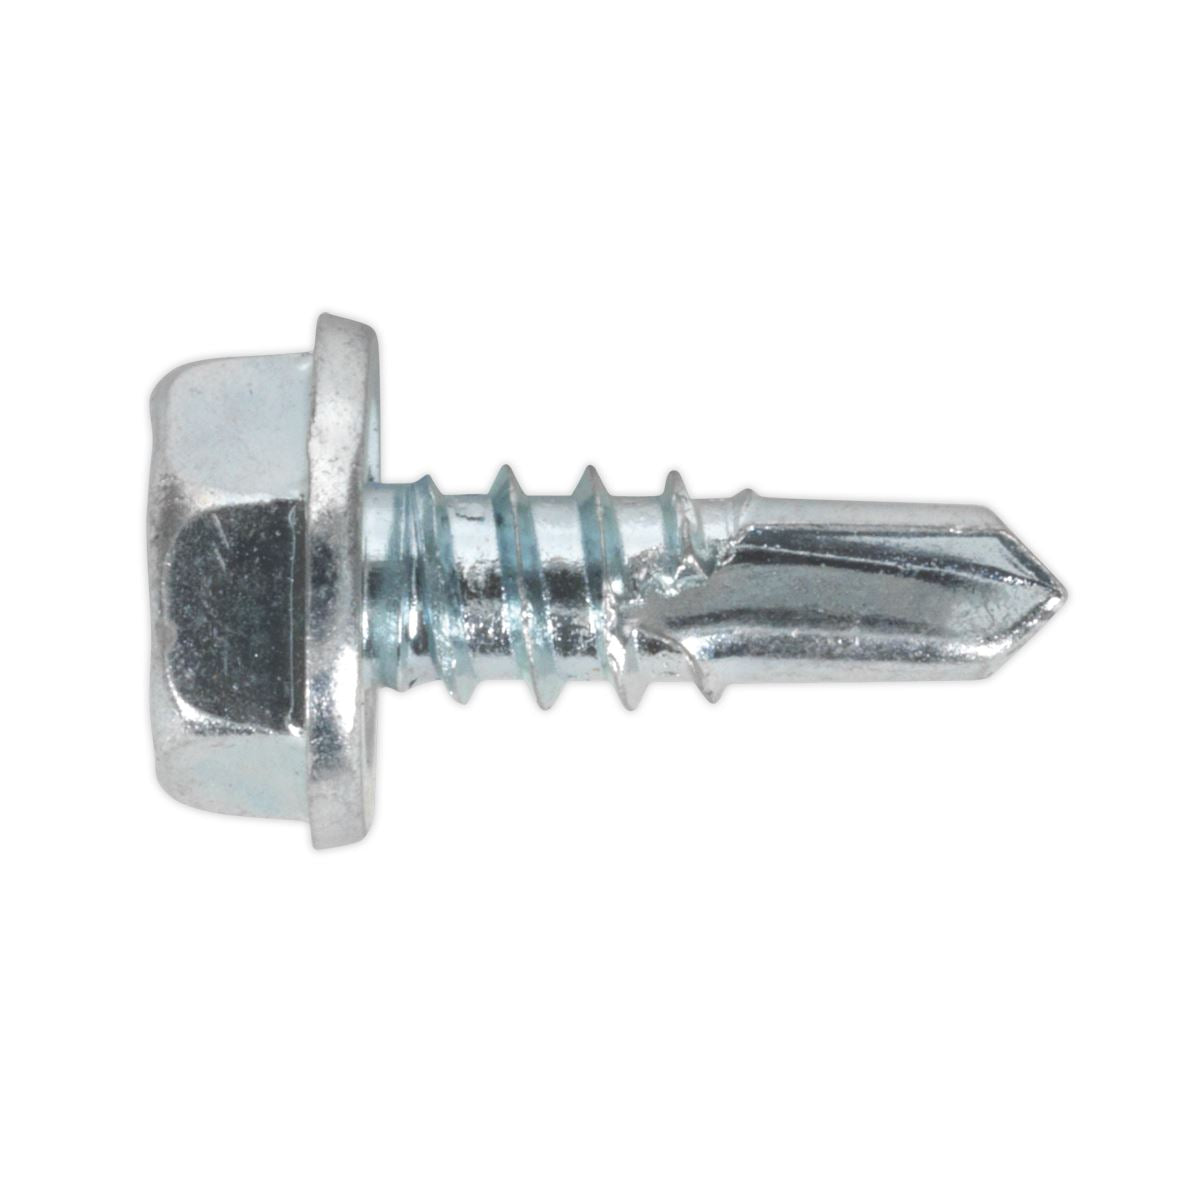 Sealey Self-Drilling Screw 4.8 x 13mm Hex Head Zinc Pack of 100